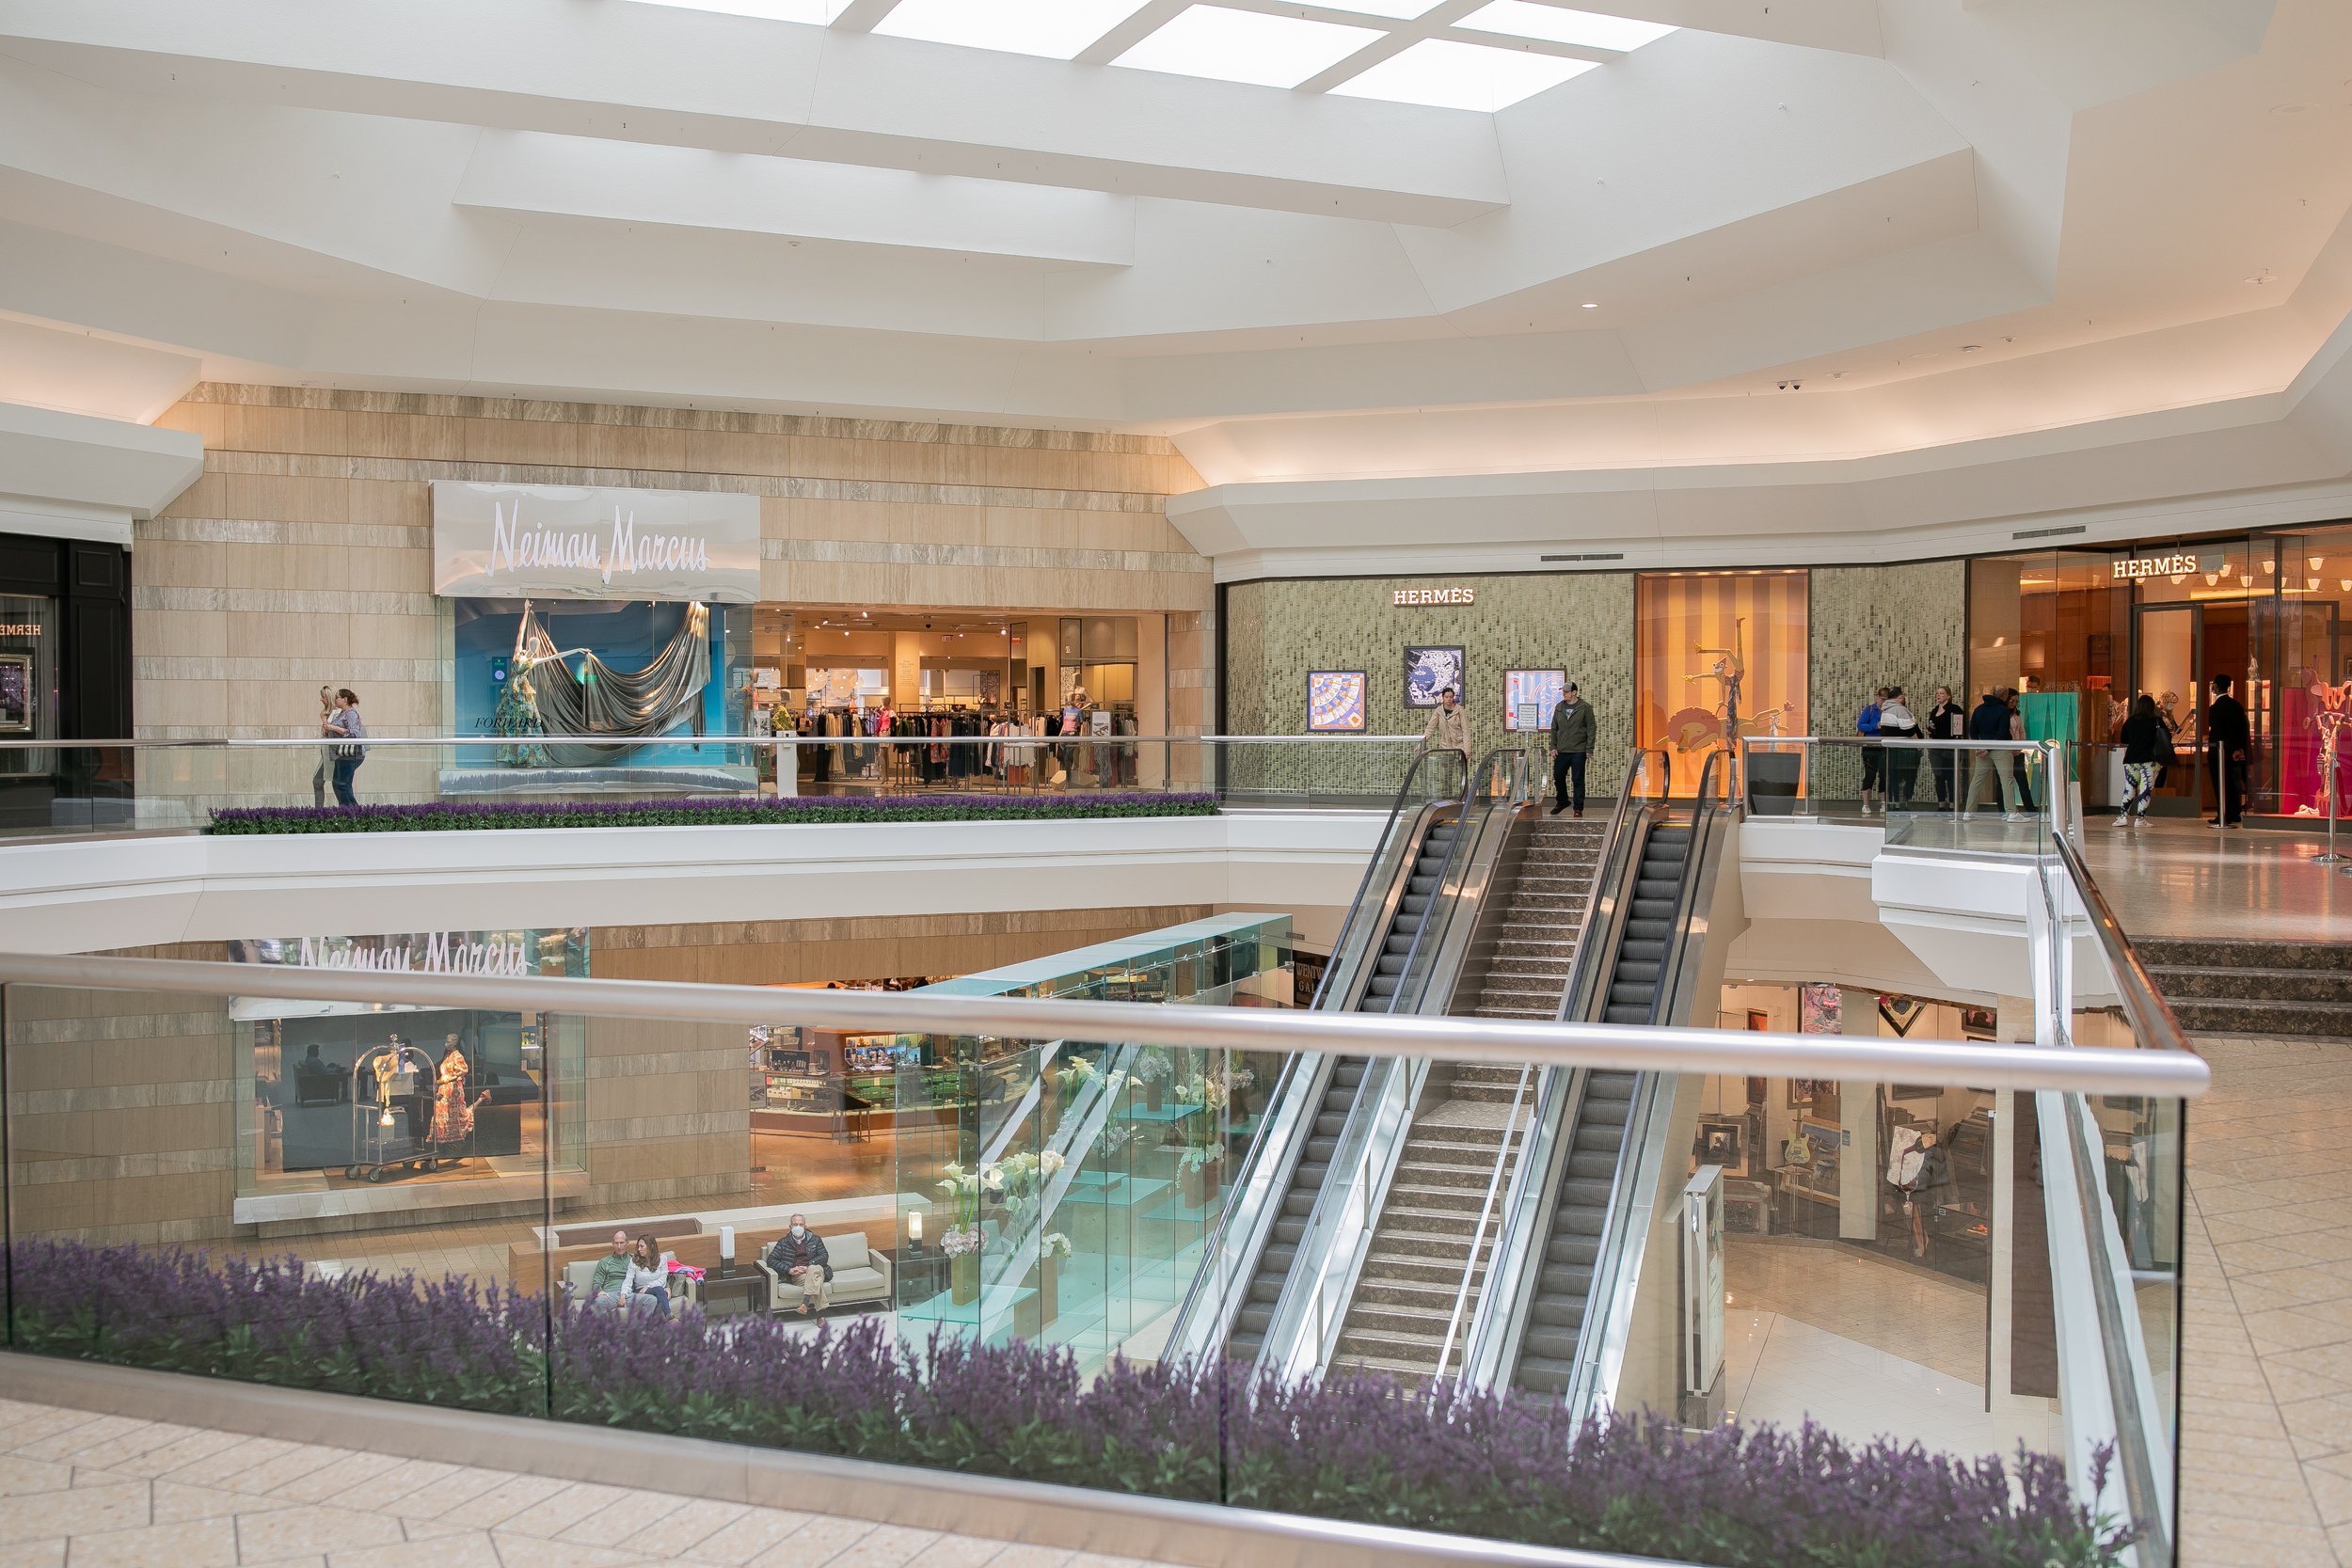 Retail - Louis Vuitton, Short Hills Mall, NJ